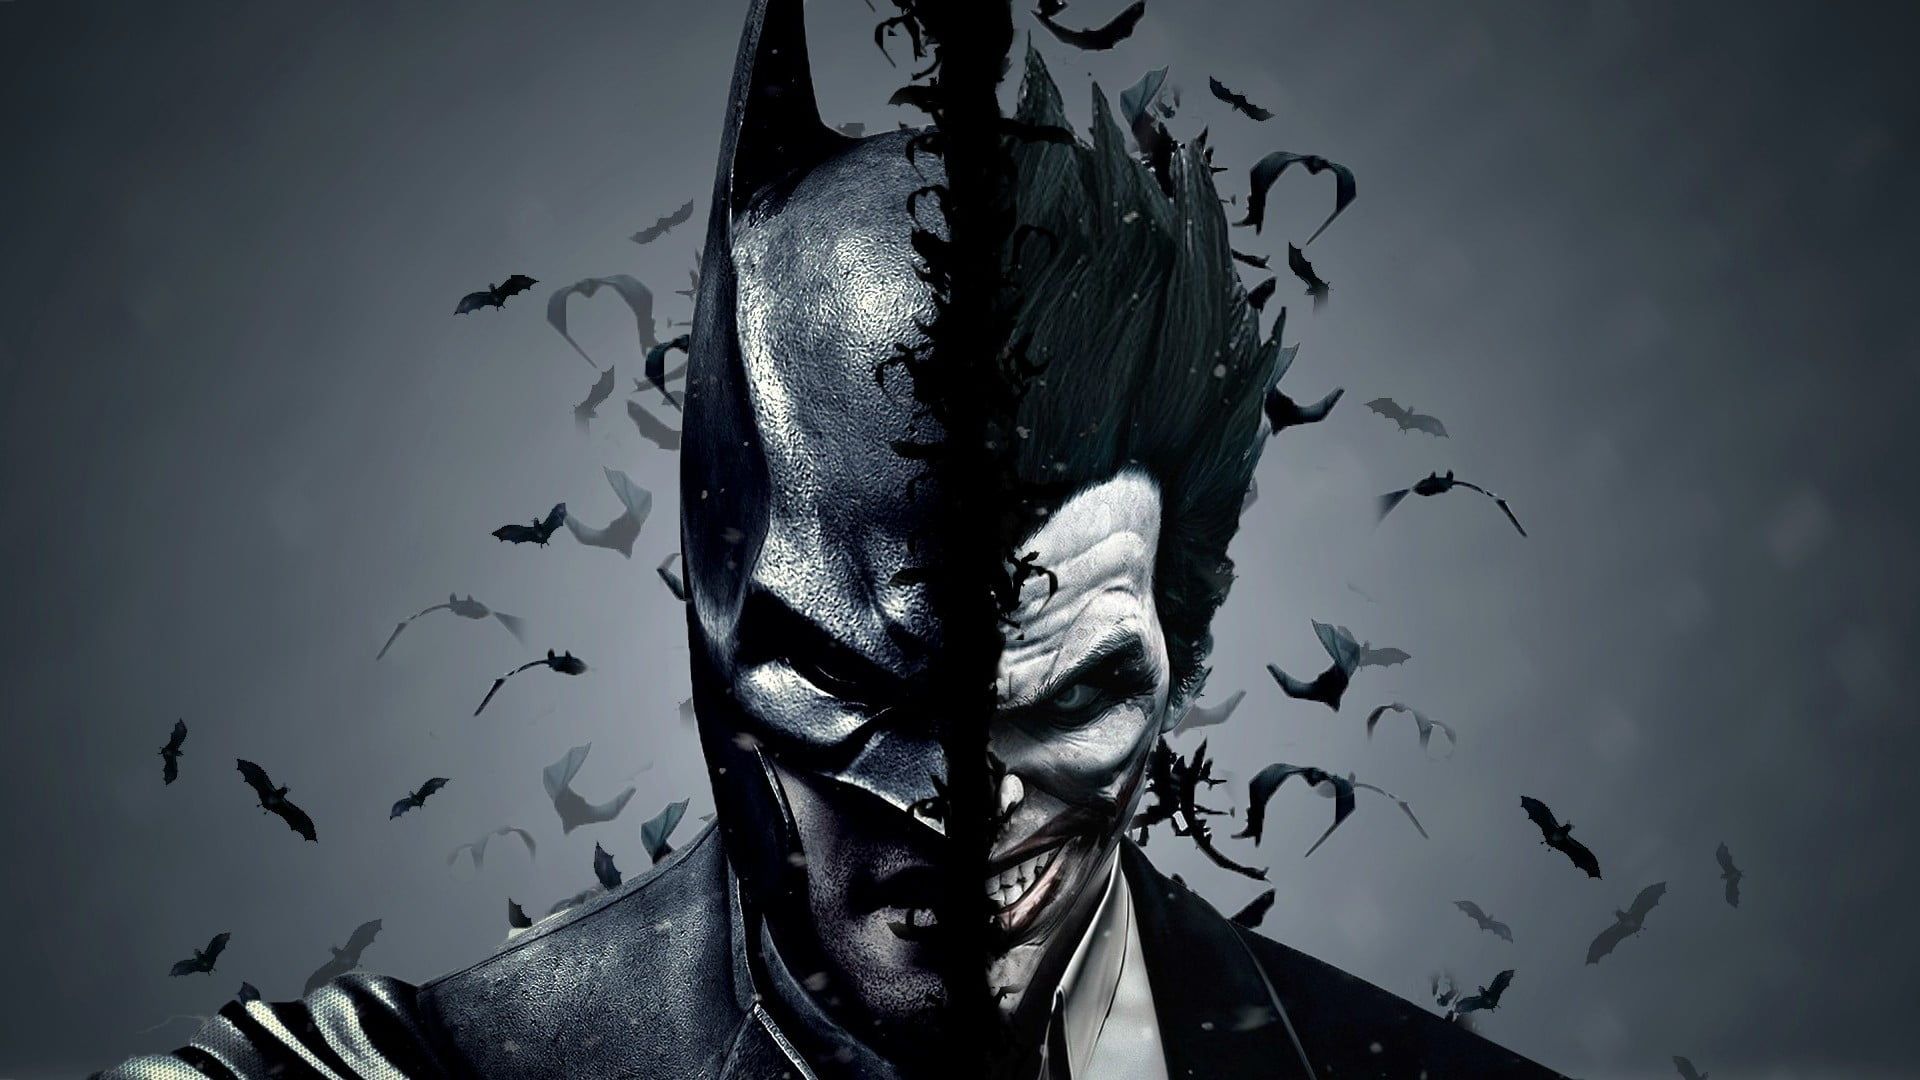 Batman and Joker illustration #Batman #Joker Batman: Arkham Origins P # wallpaper #hdwallpaper #deskt. Joker wallpaper, Batman wallpaper, HD batman wallpaper